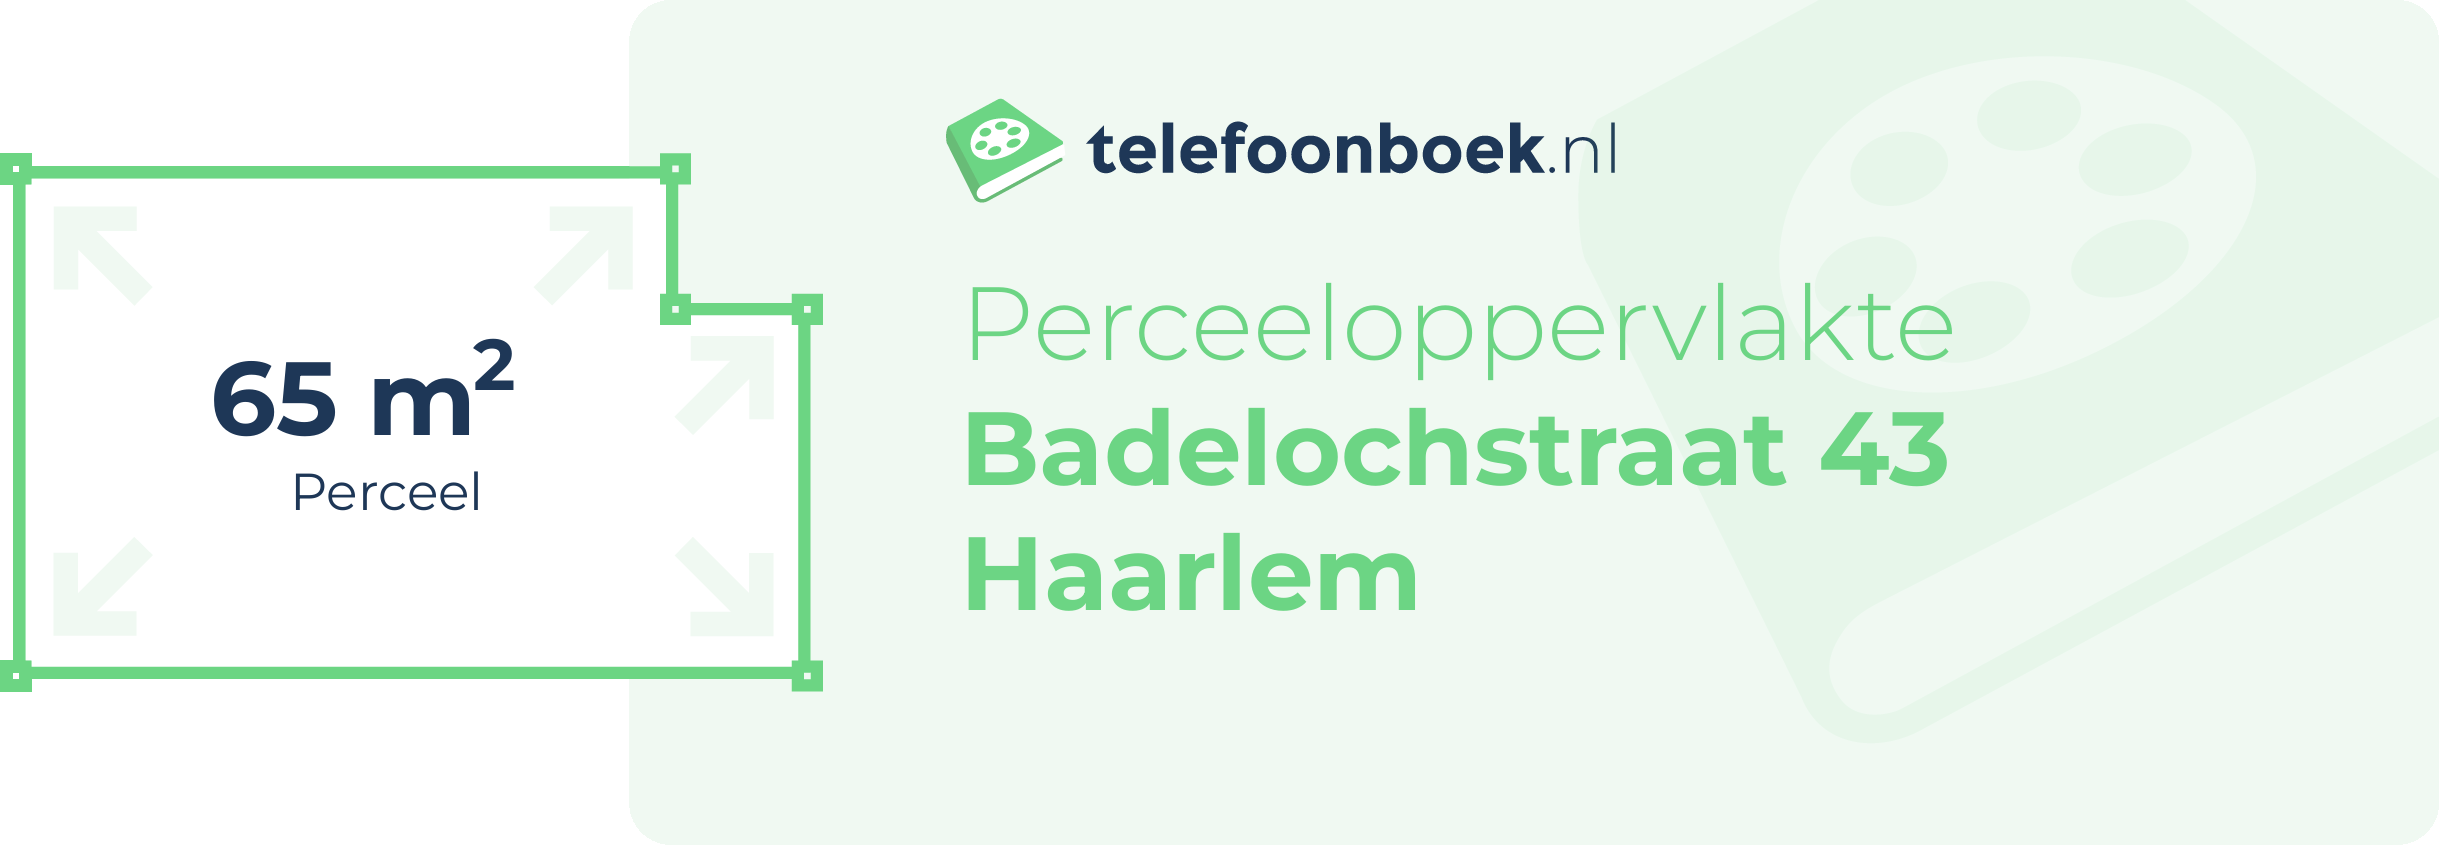 Perceeloppervlakte Badelochstraat 43 Haarlem